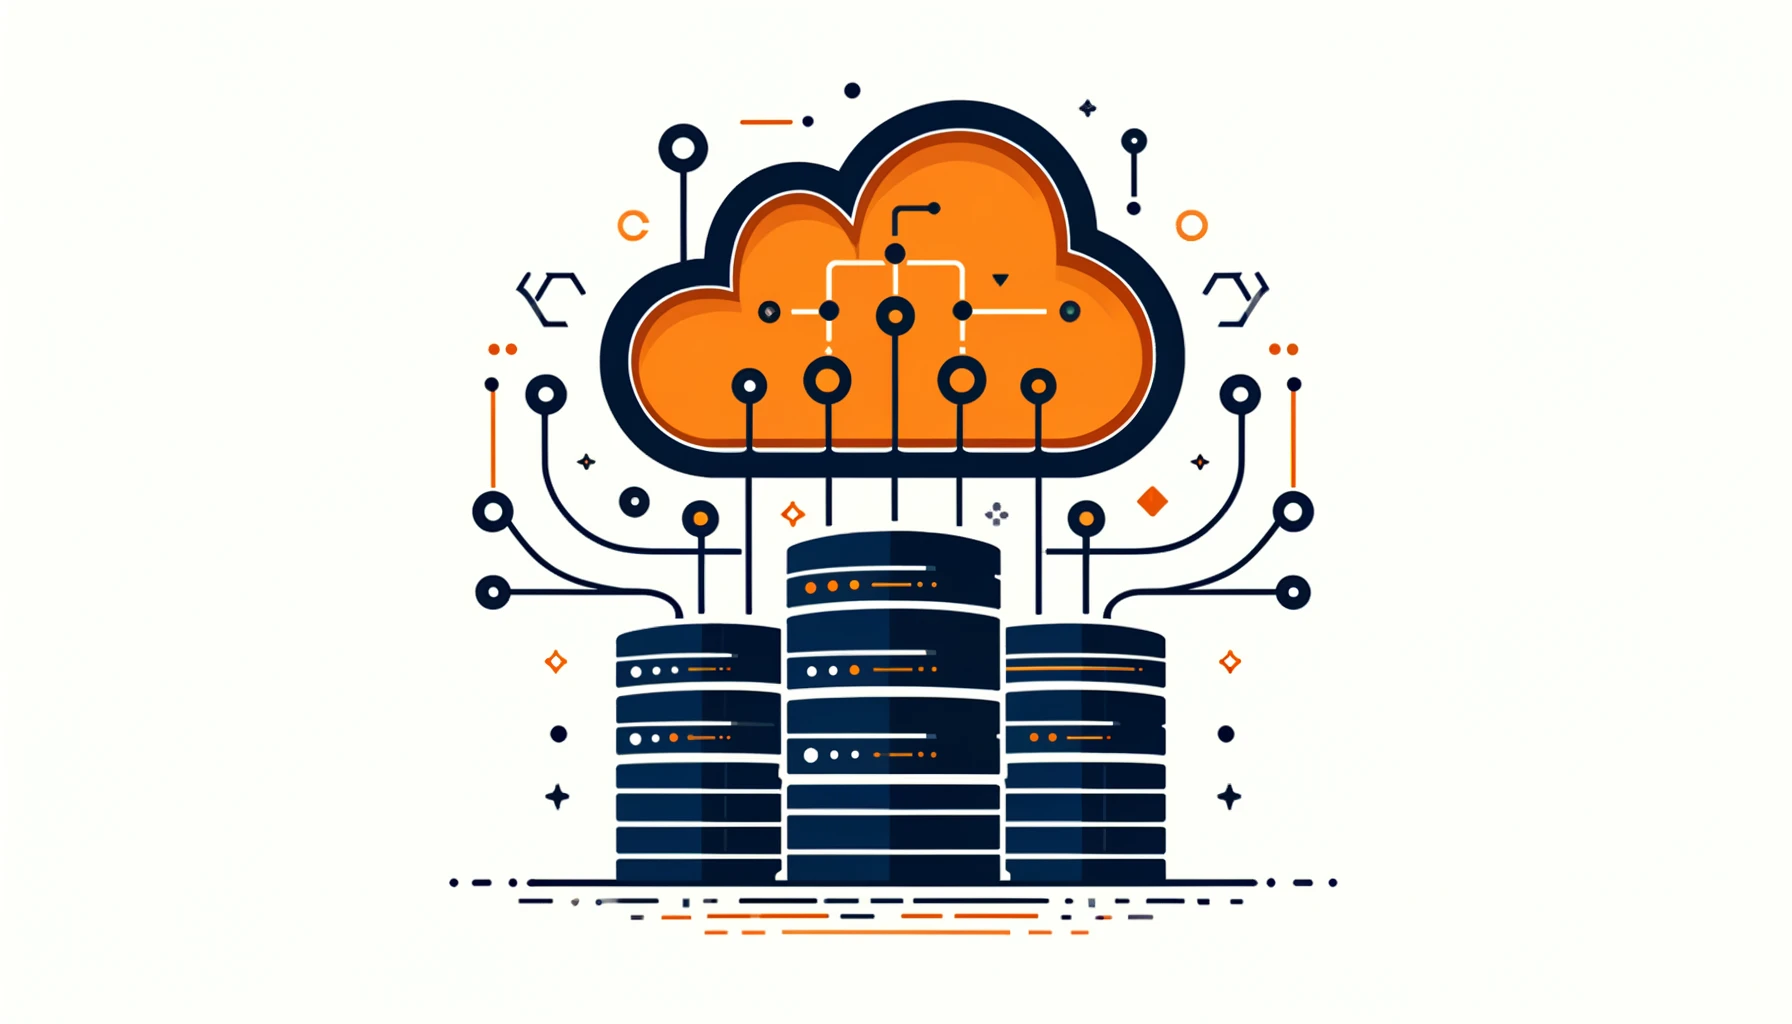 Cloud Database